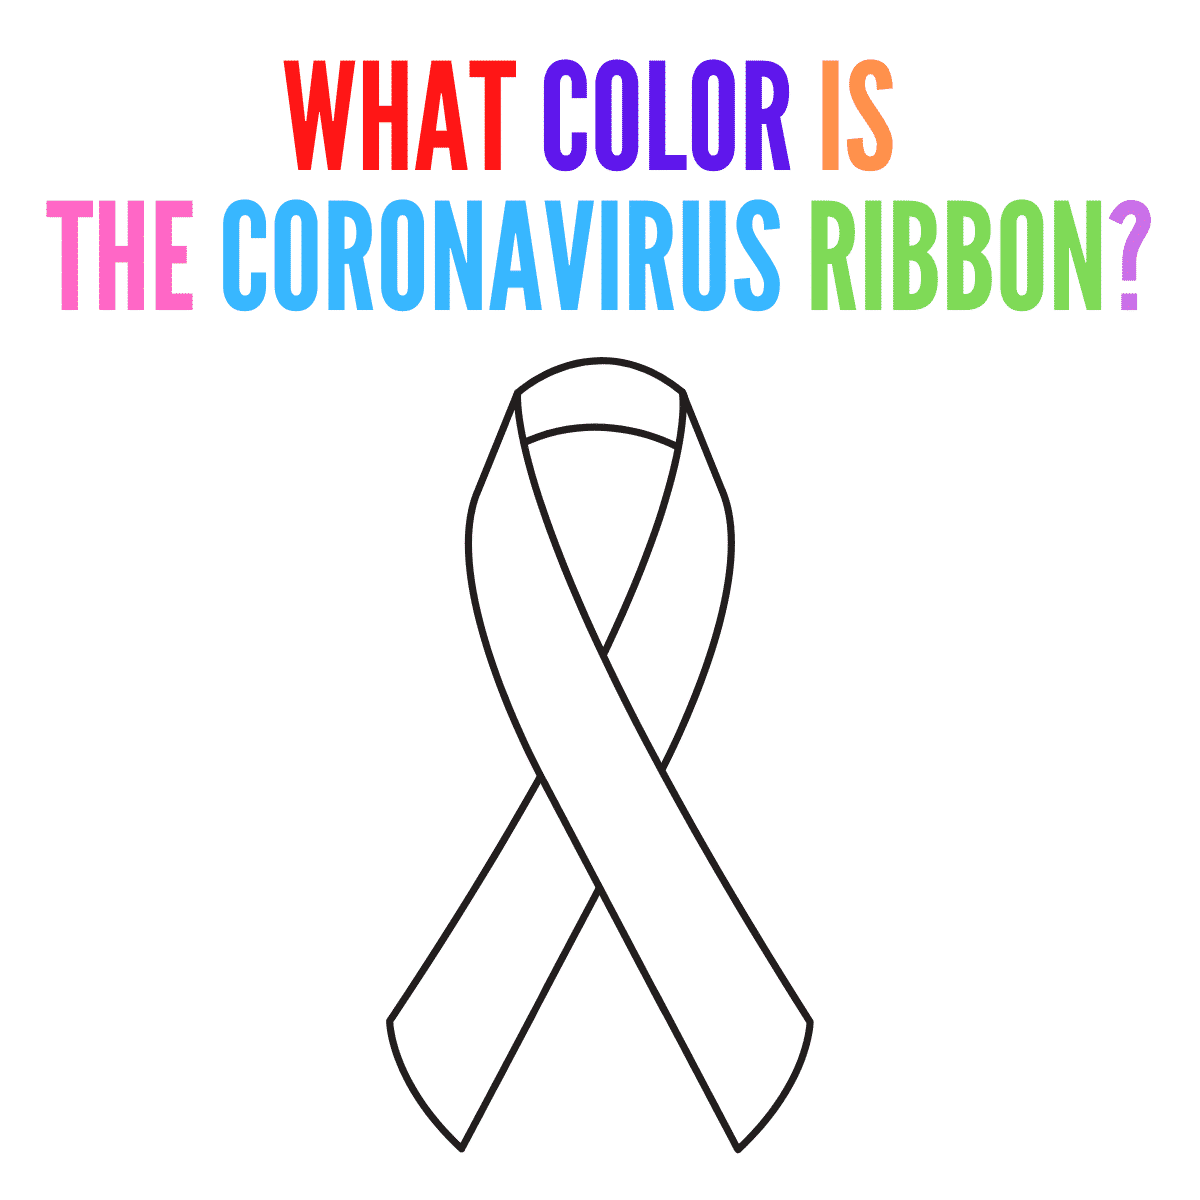 What Color is the Coronavirus (COVID-19) Ribbon?